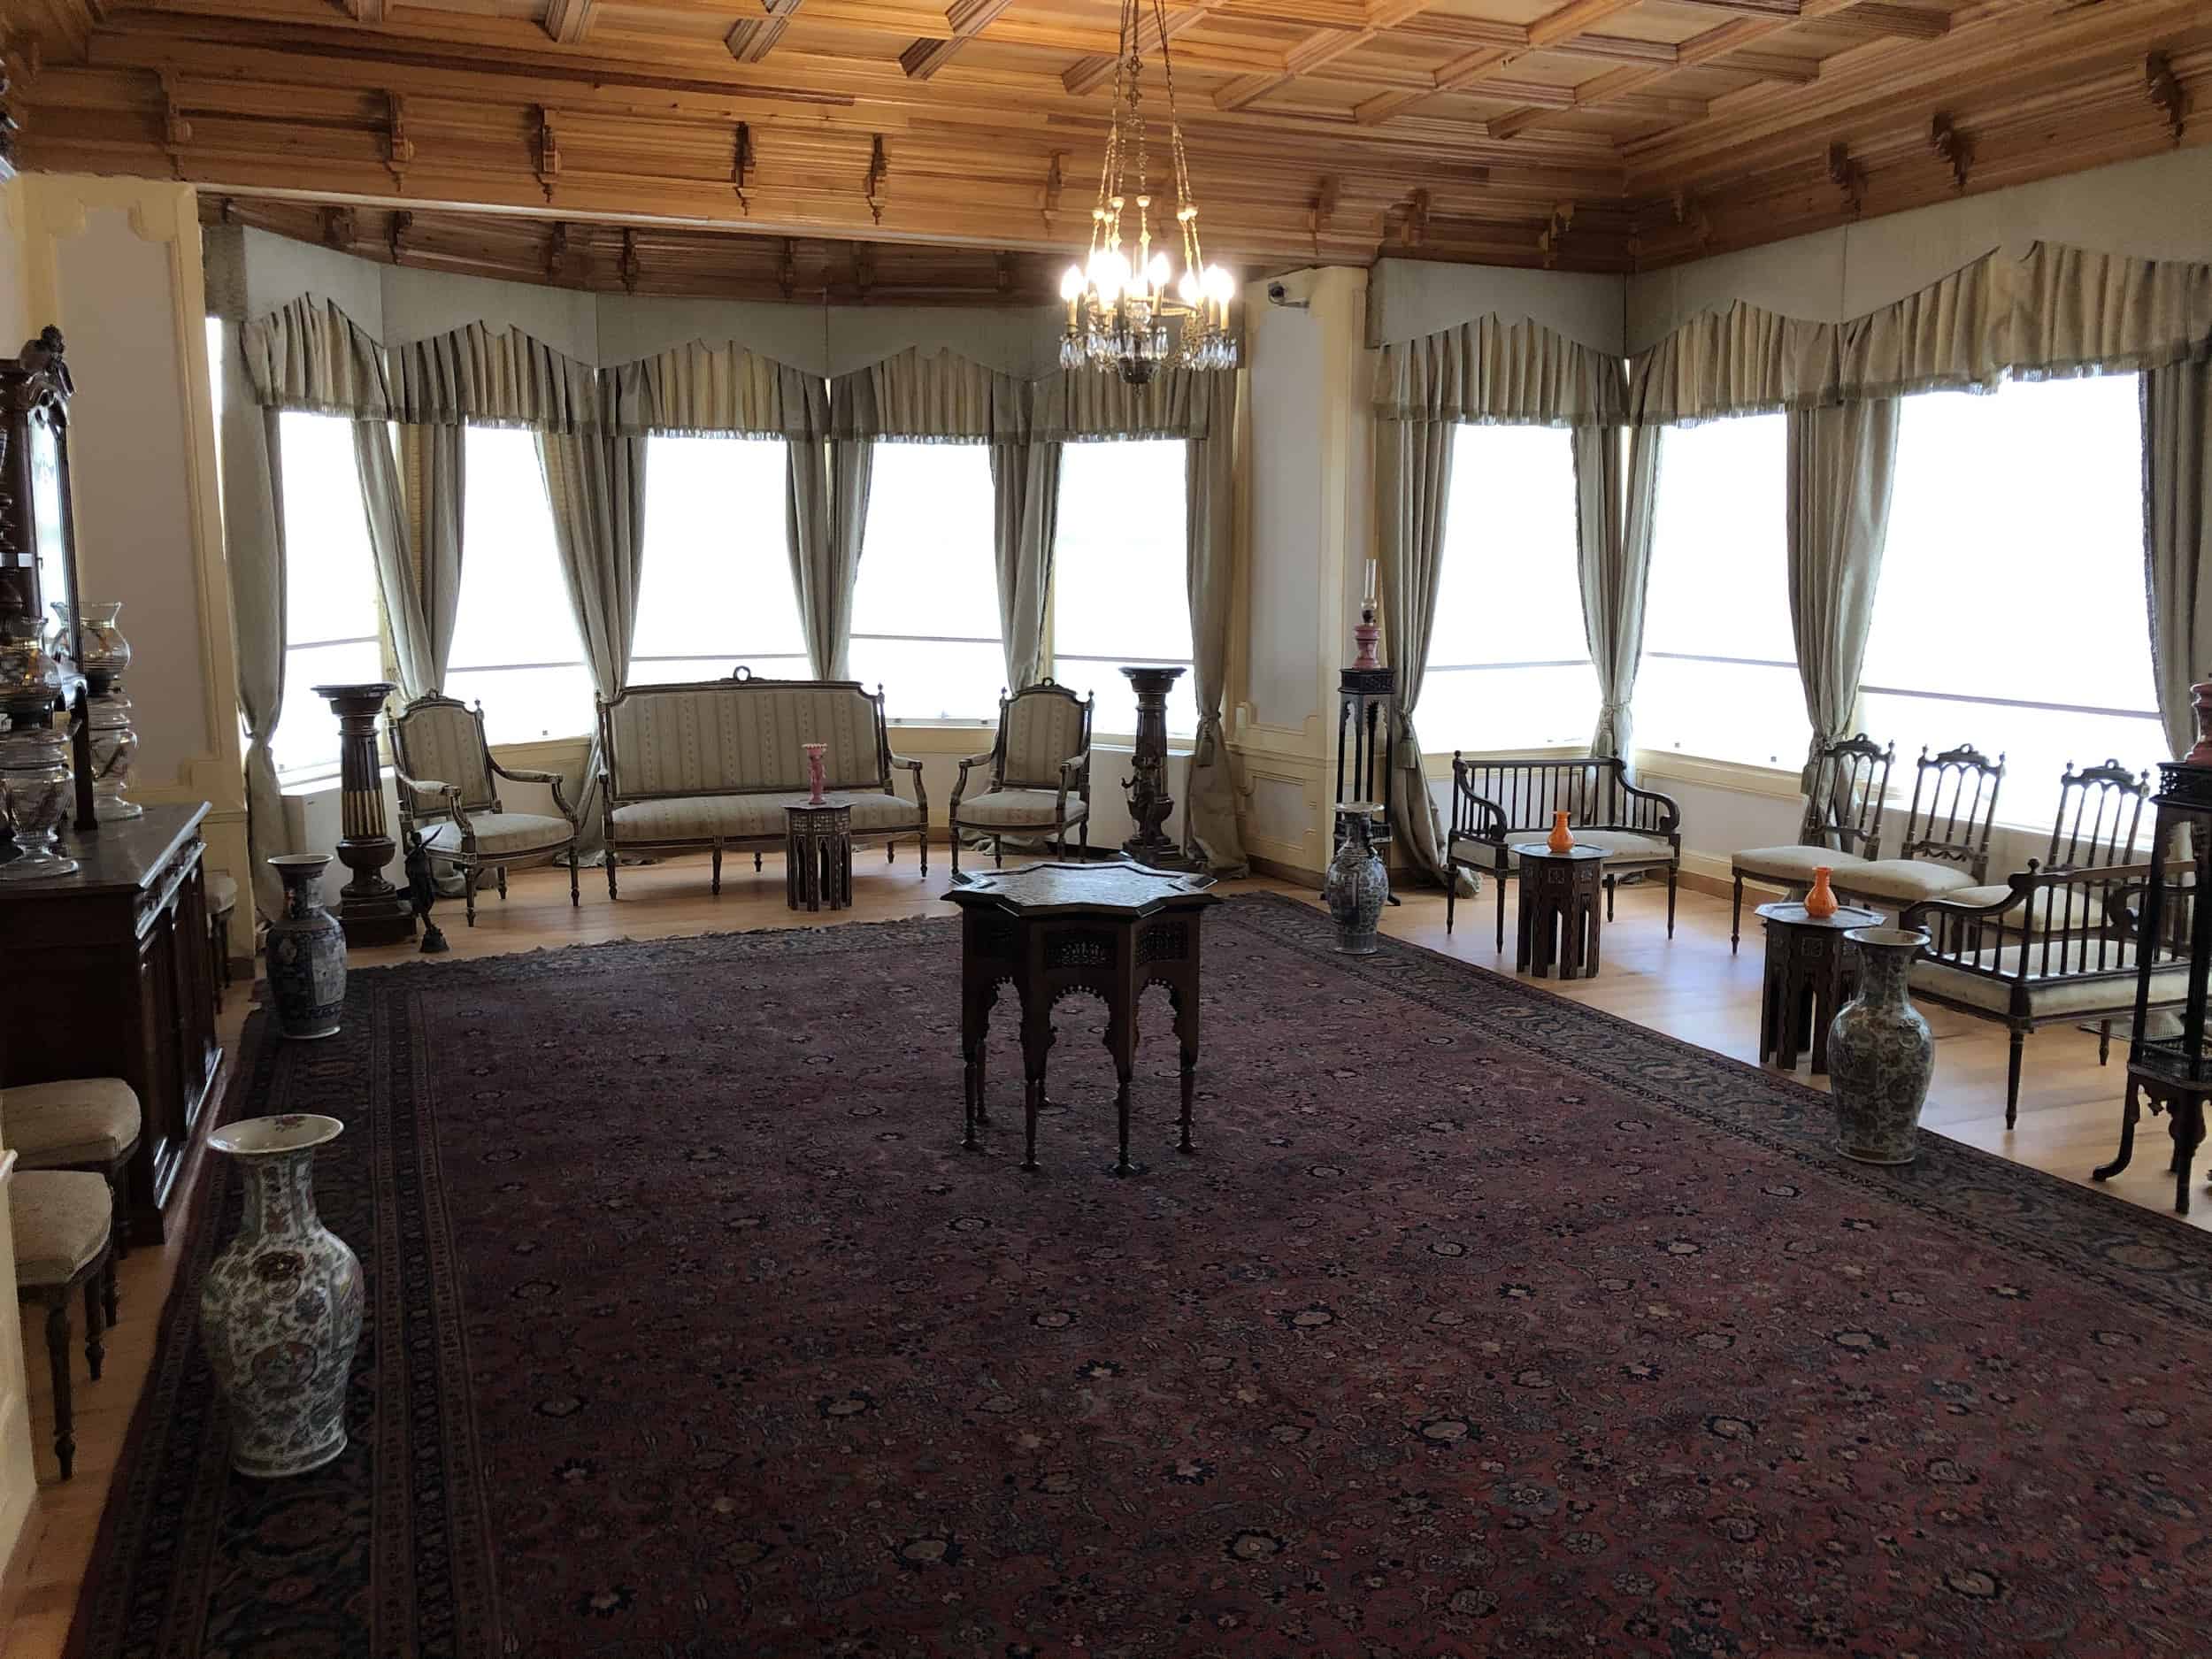 Reception hall at the Bursa Atatürk House Museum in Bursa, Turkey